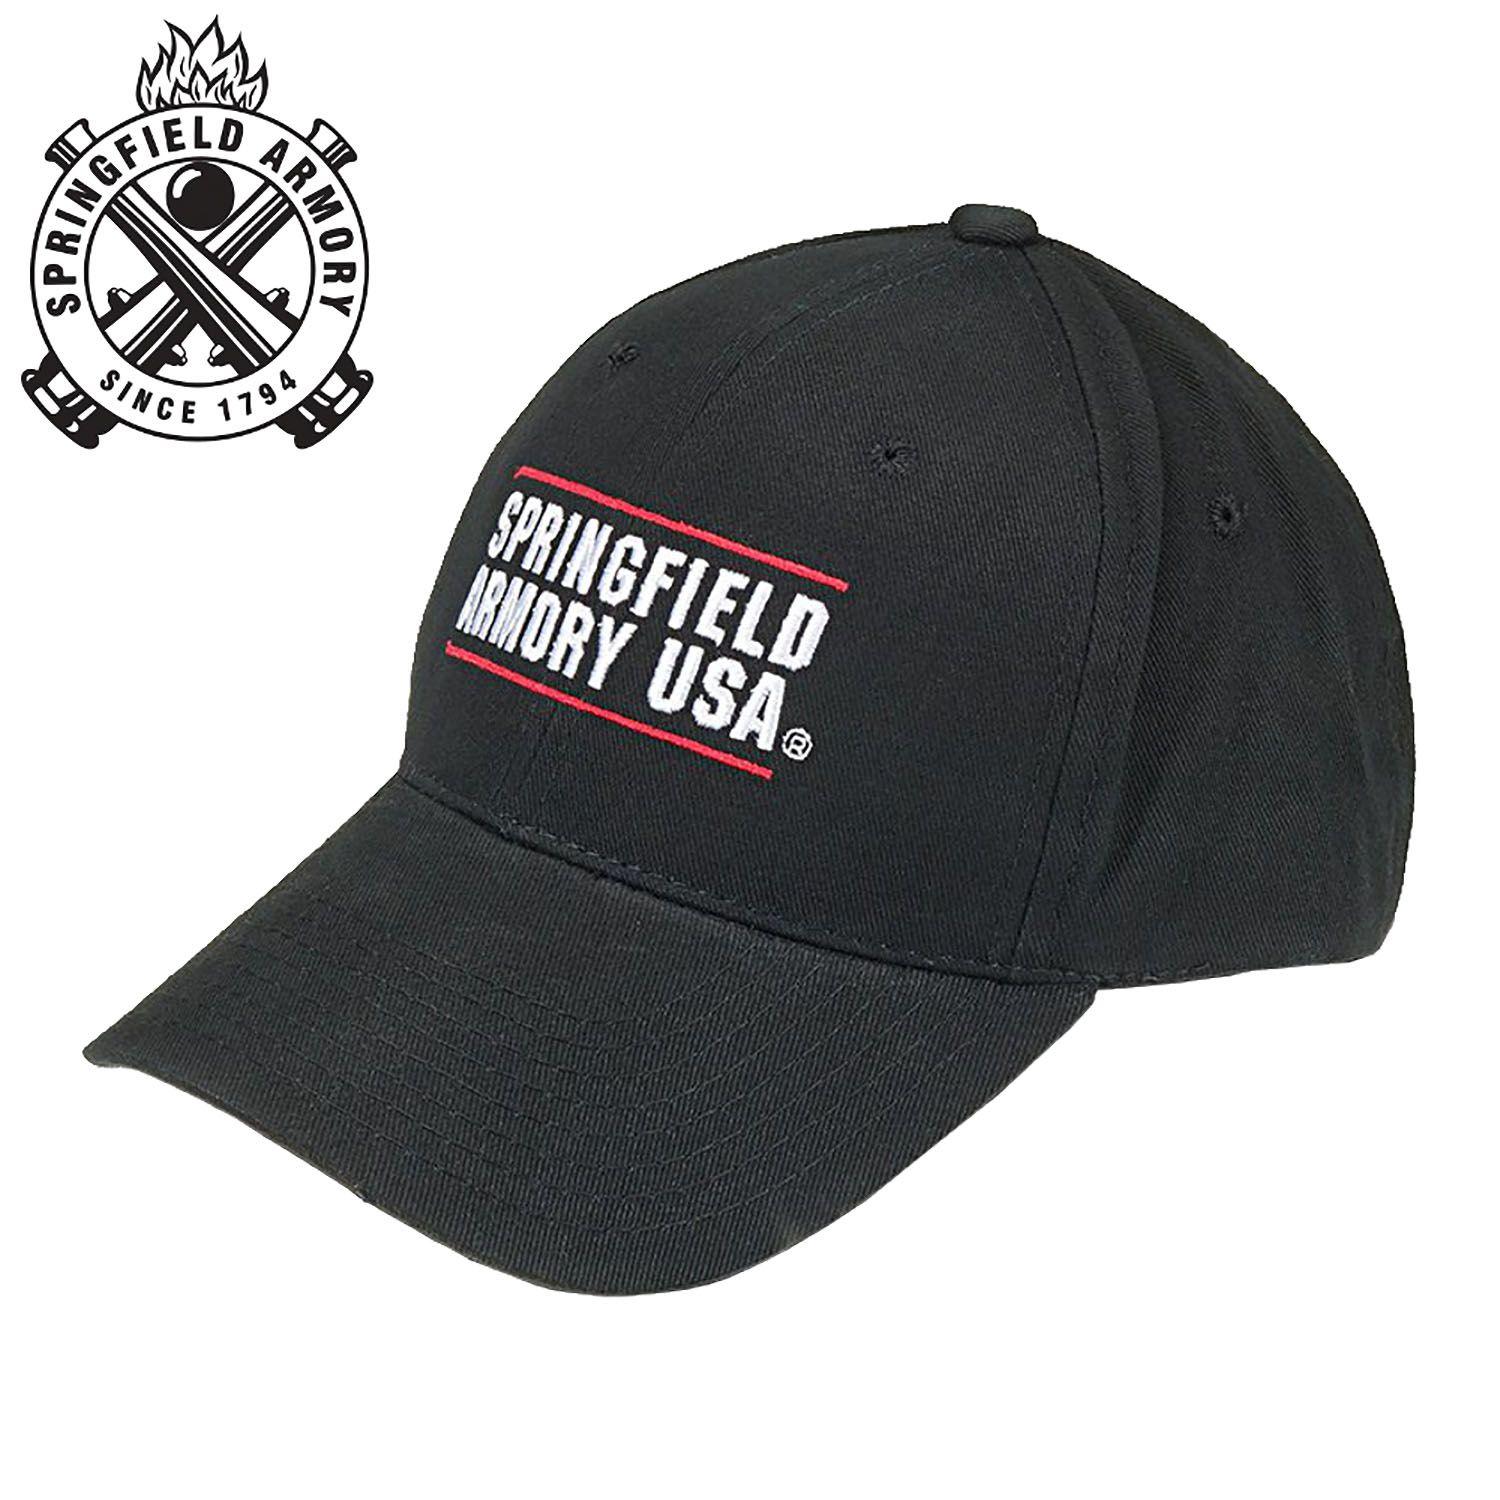 Springfield Armory USA Logo - Springfield Armory USA Cap, Black: MGW